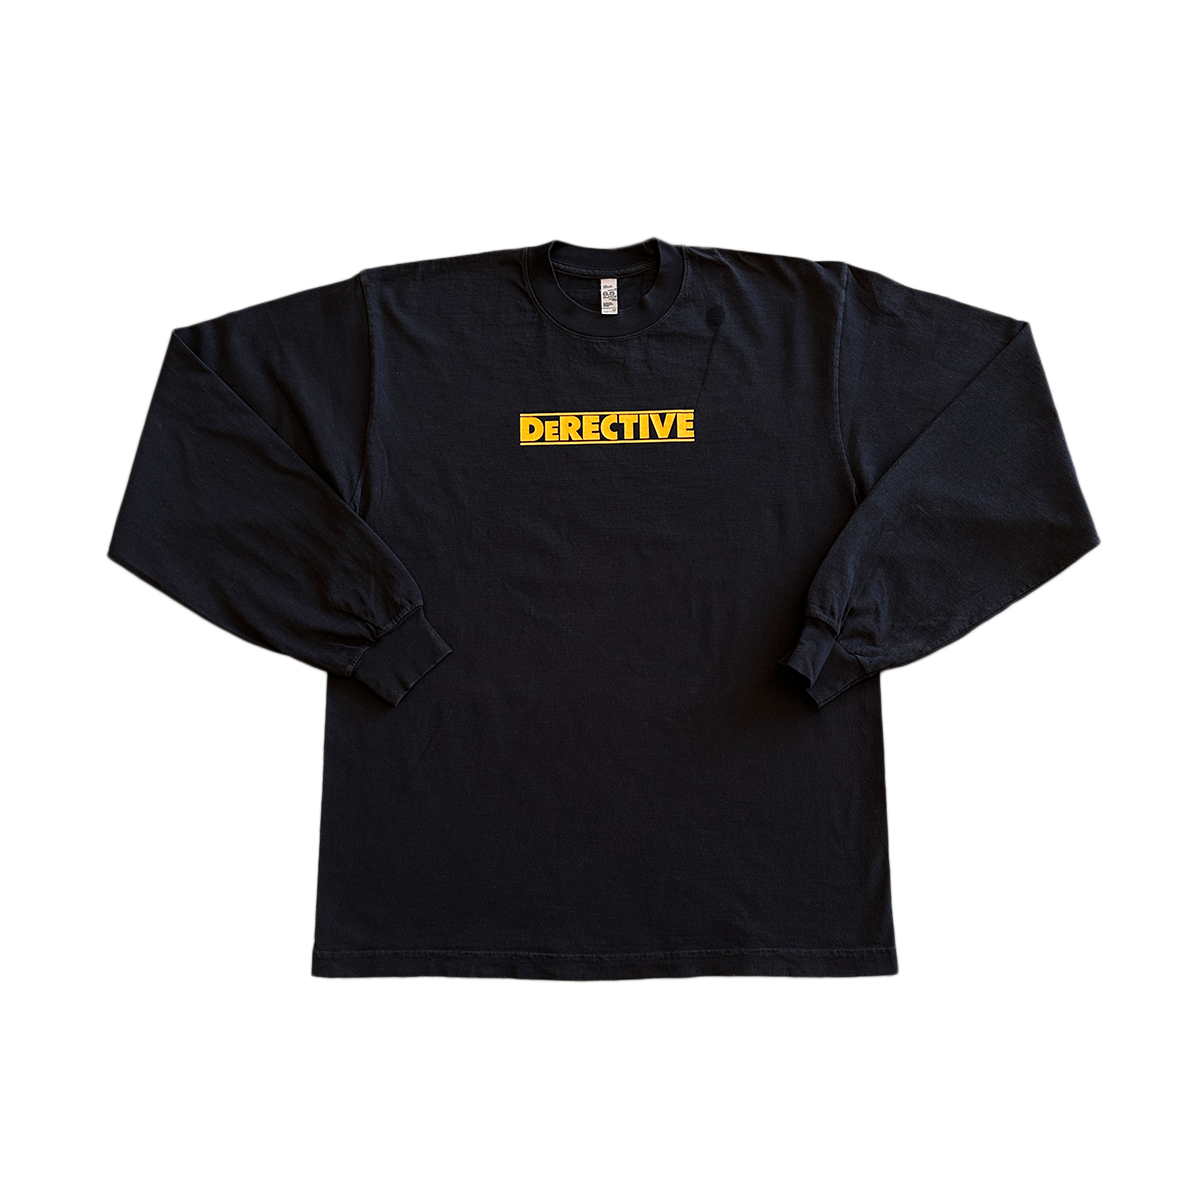 DeRECTIVE Long Sleeve T-Shirt - Black